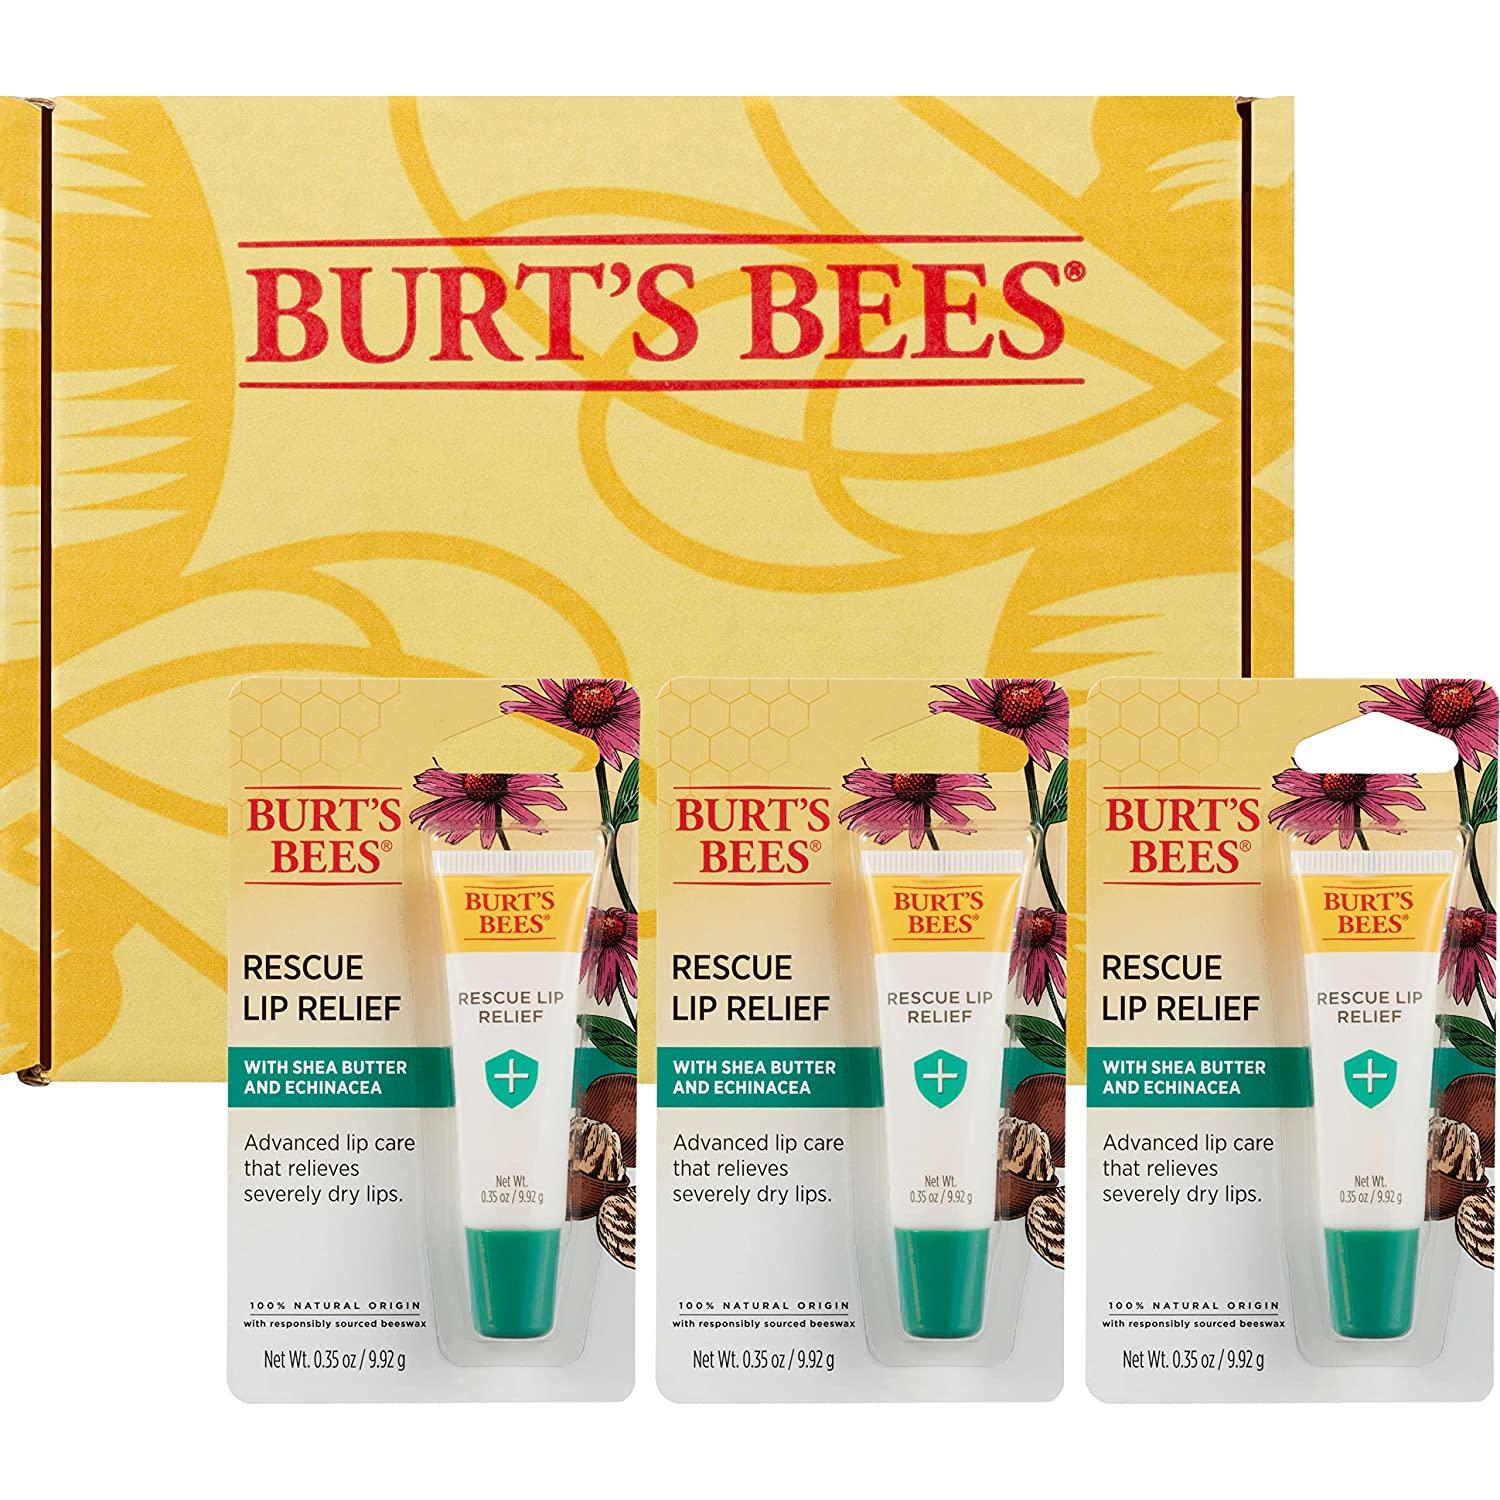 Burt's Bees 100% Natural Moisturizing Lip Balm, Variety Pack, 4 Count